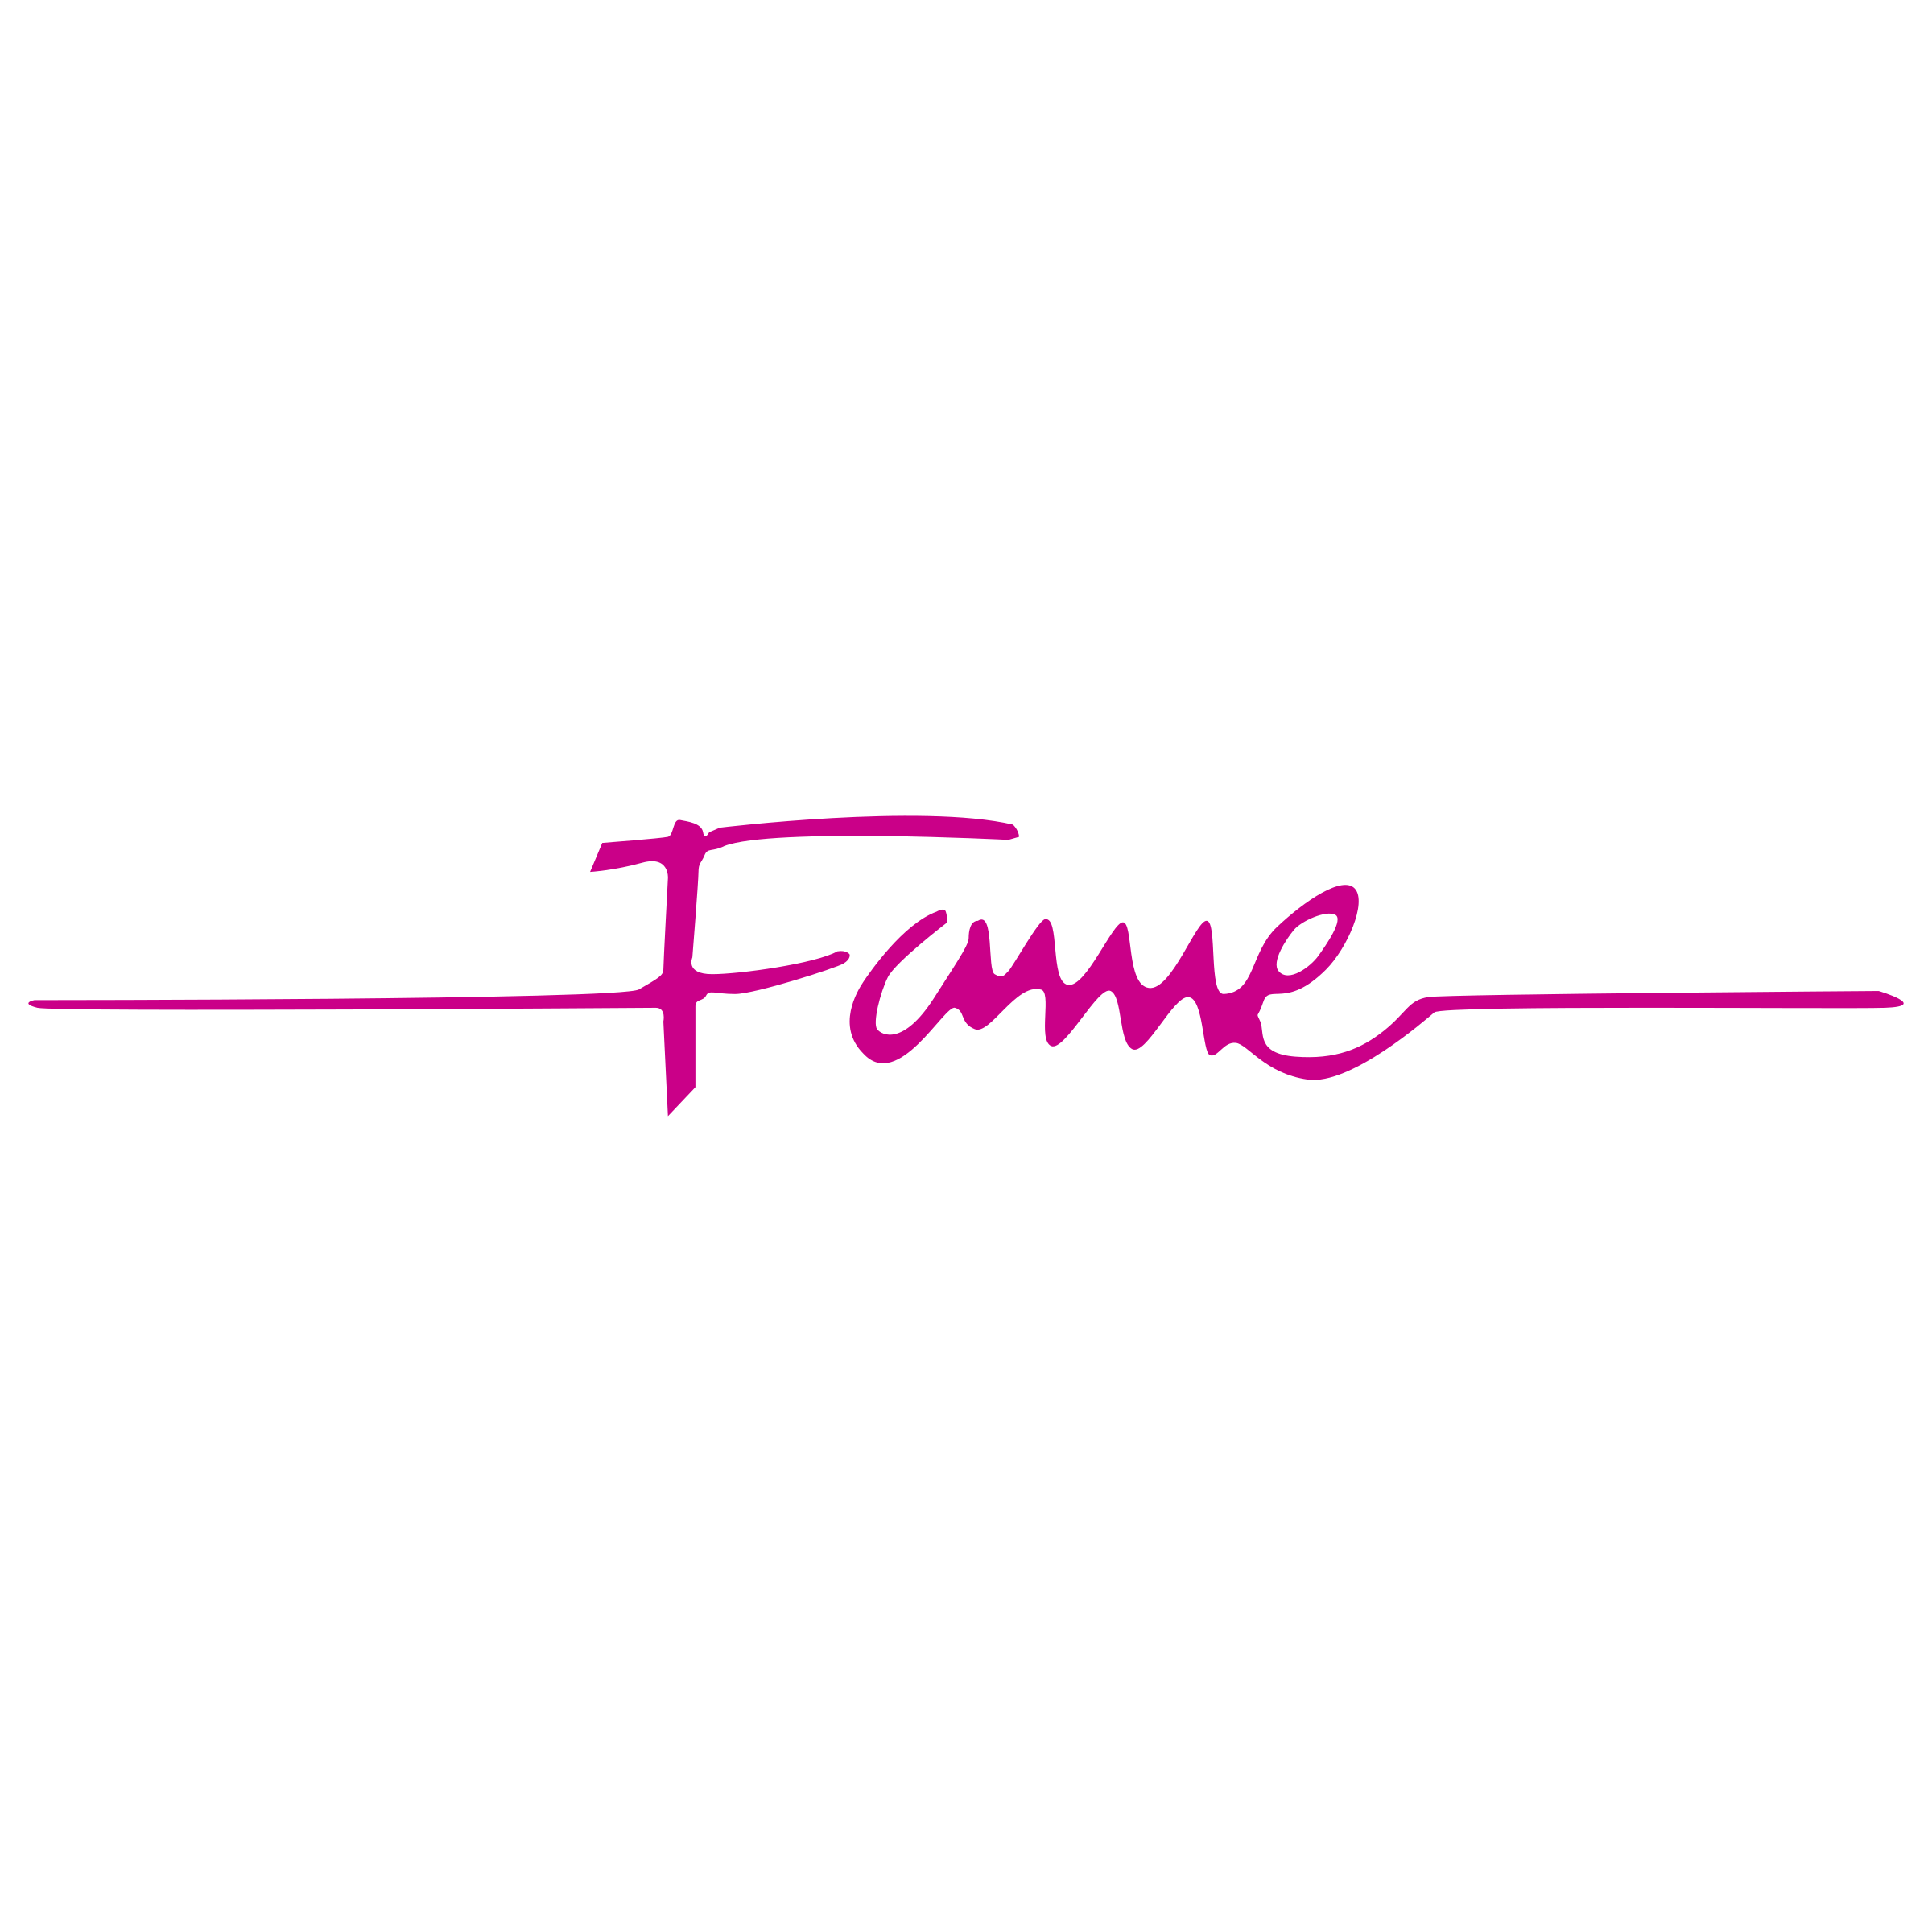 Fame Download Free PNG HQ PNG Image